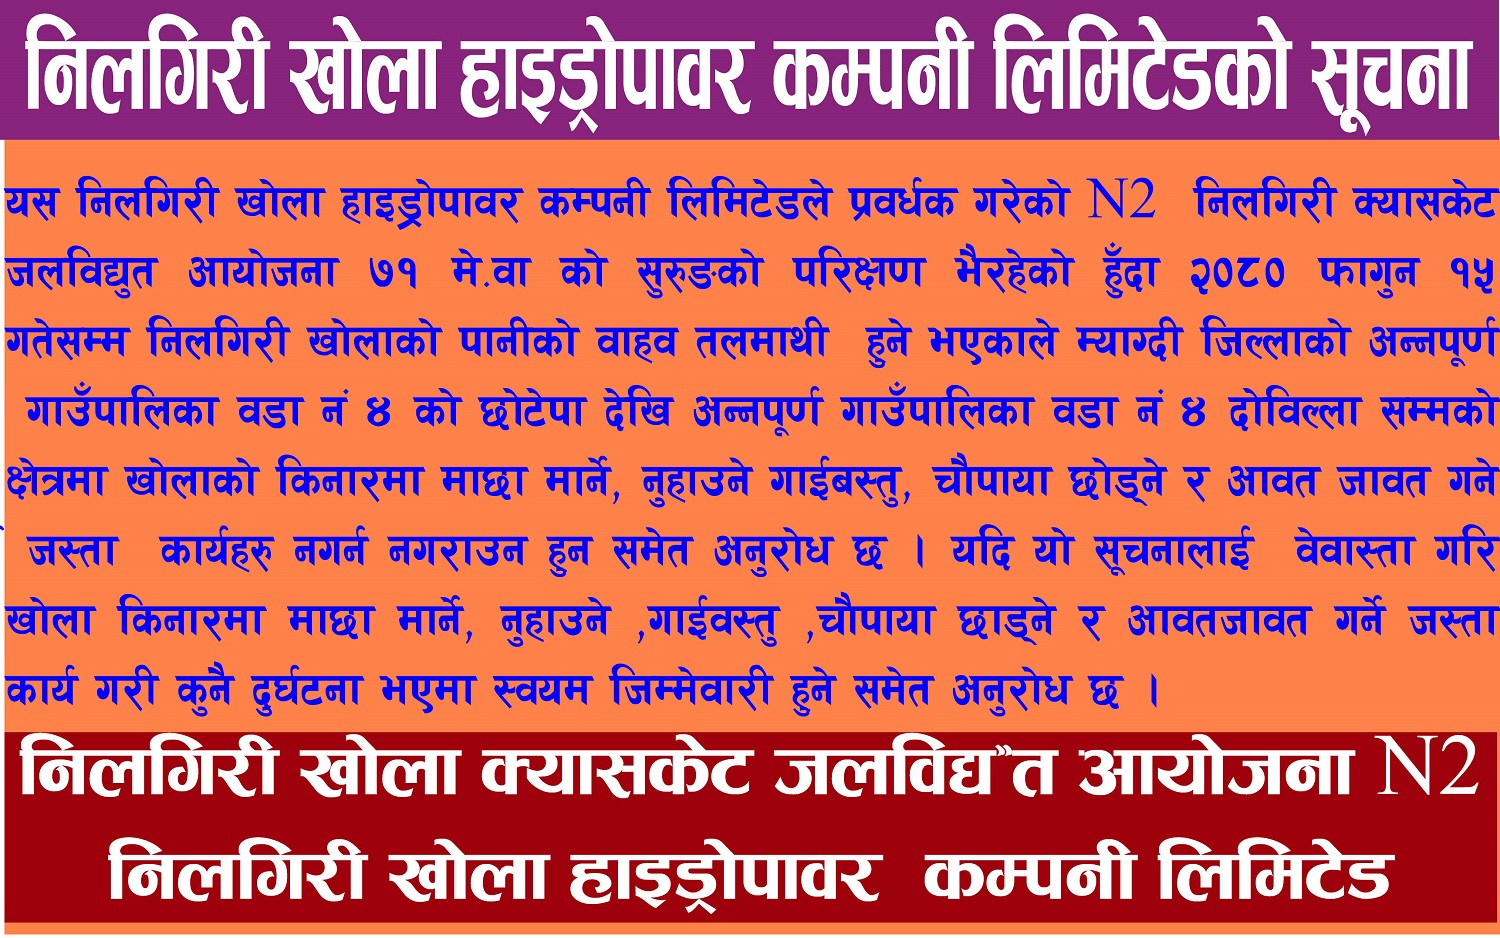 Nilgiri hydor notice magh 26